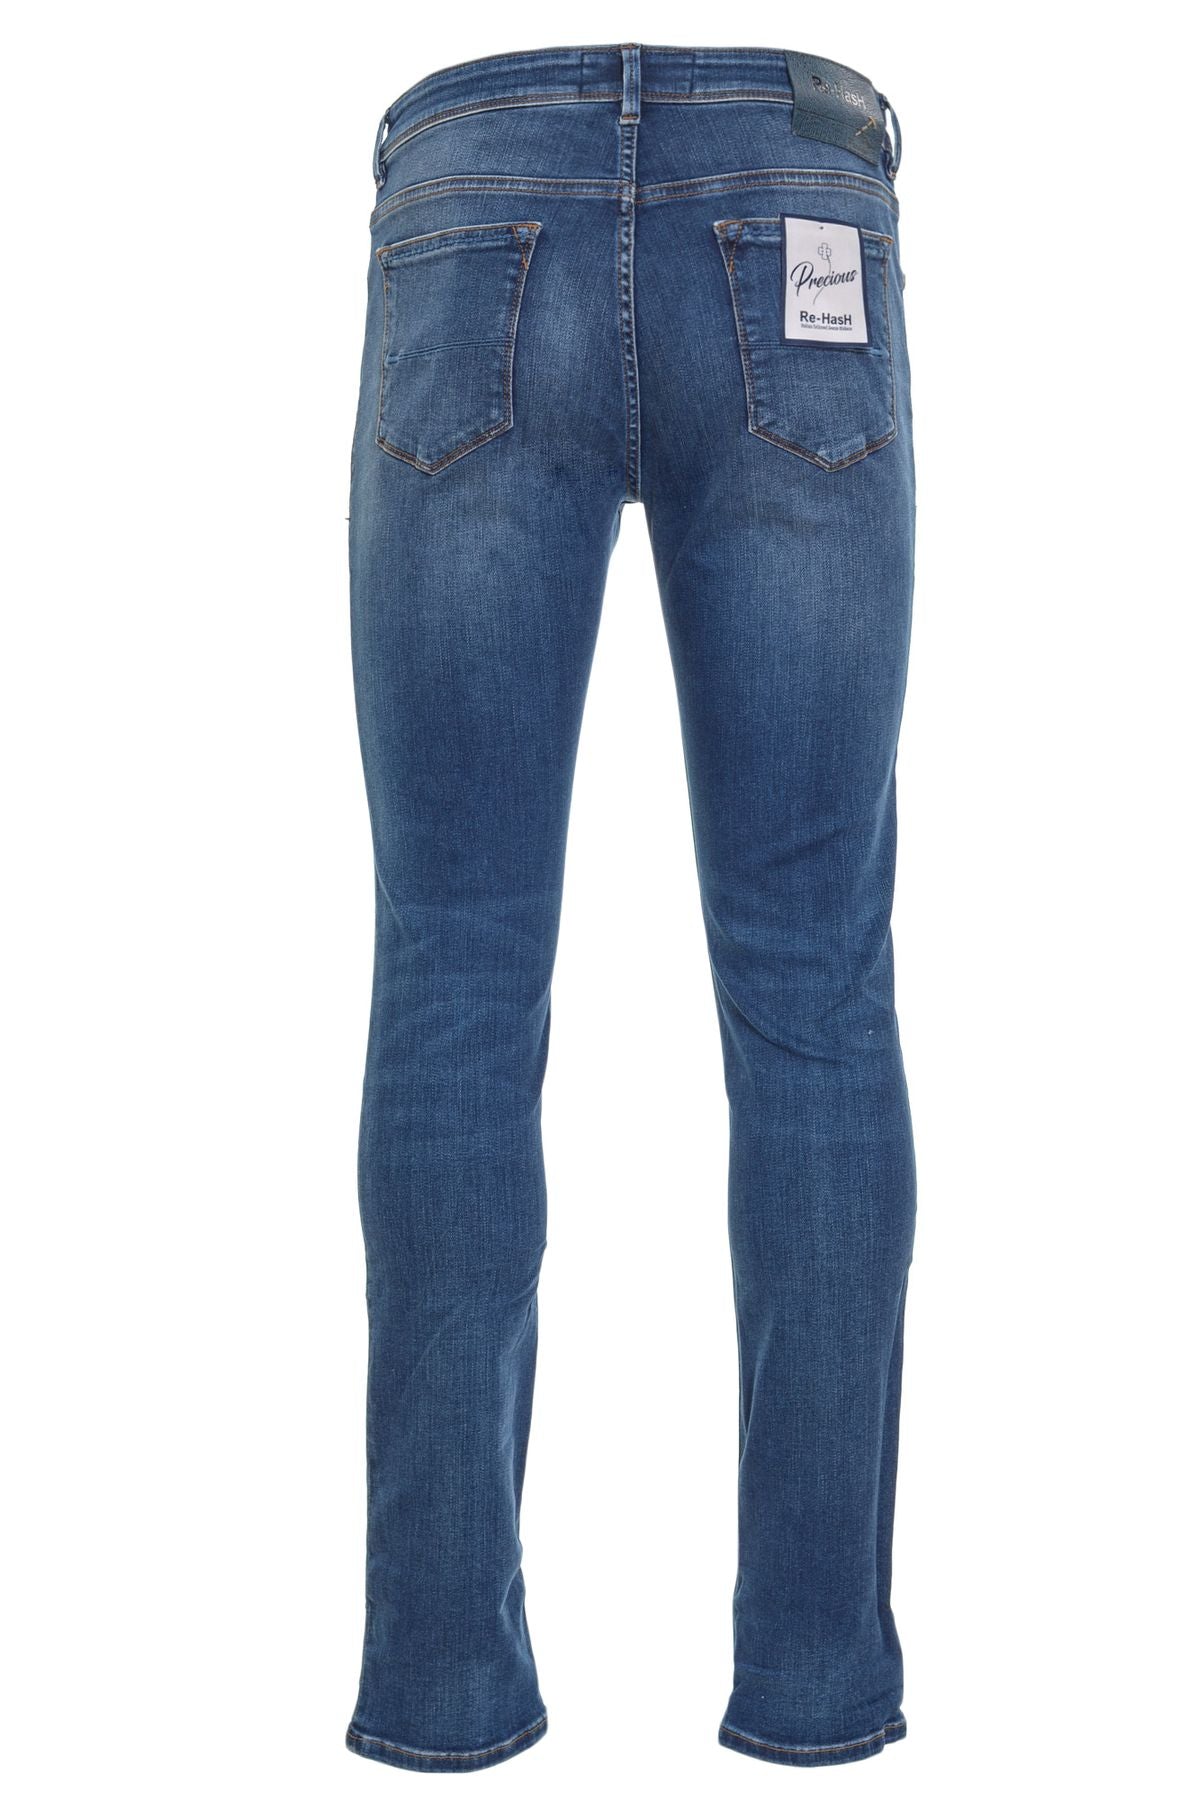 Re-HasH Jeans Autunno/Inverno p0152709rubens